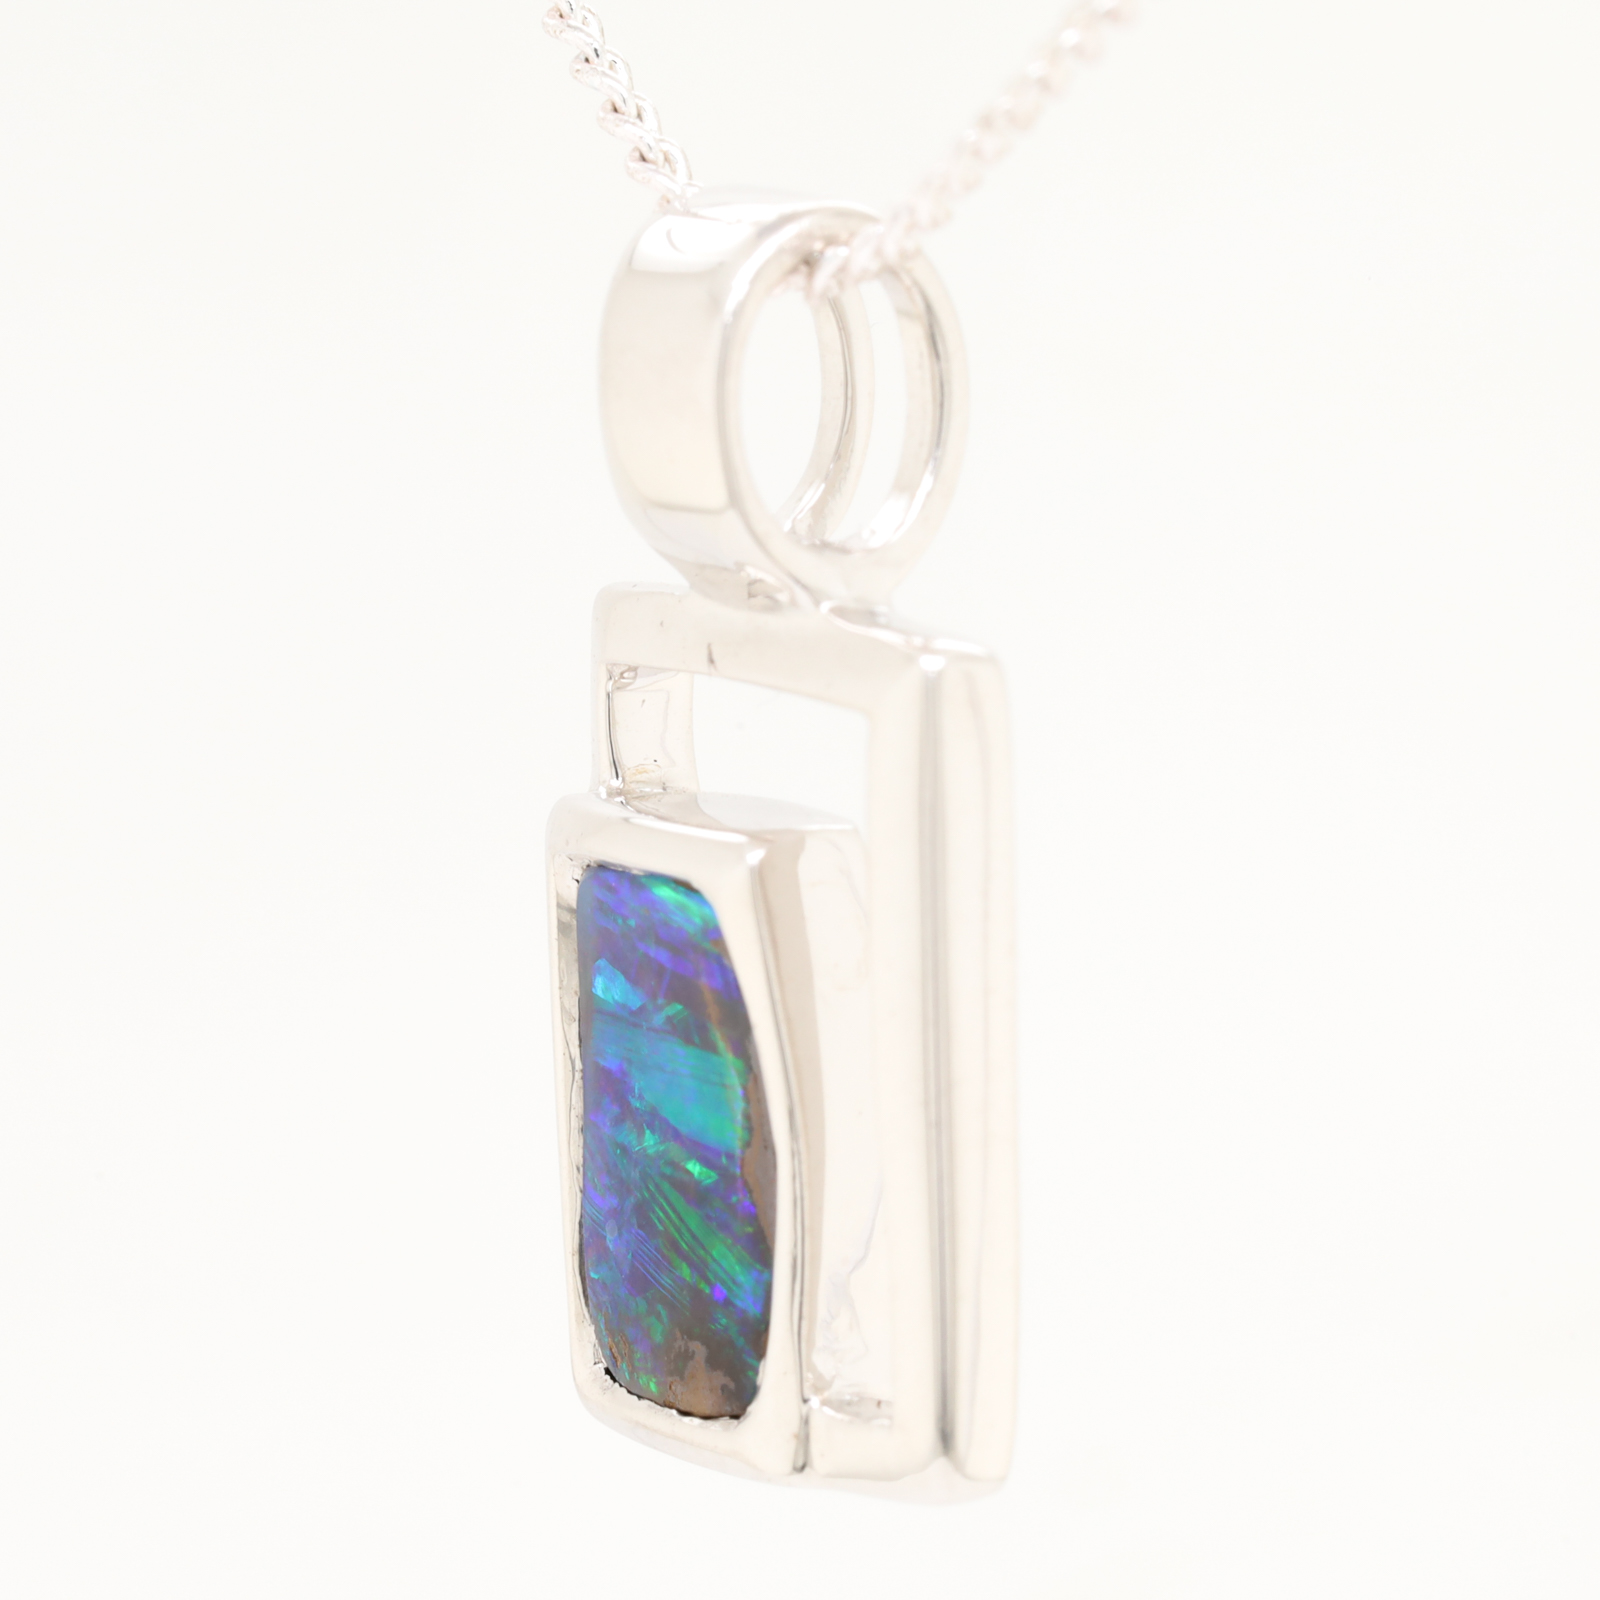 Blue Green Sterling Silver Solid Australian Boulder Opal Necklace Pendant